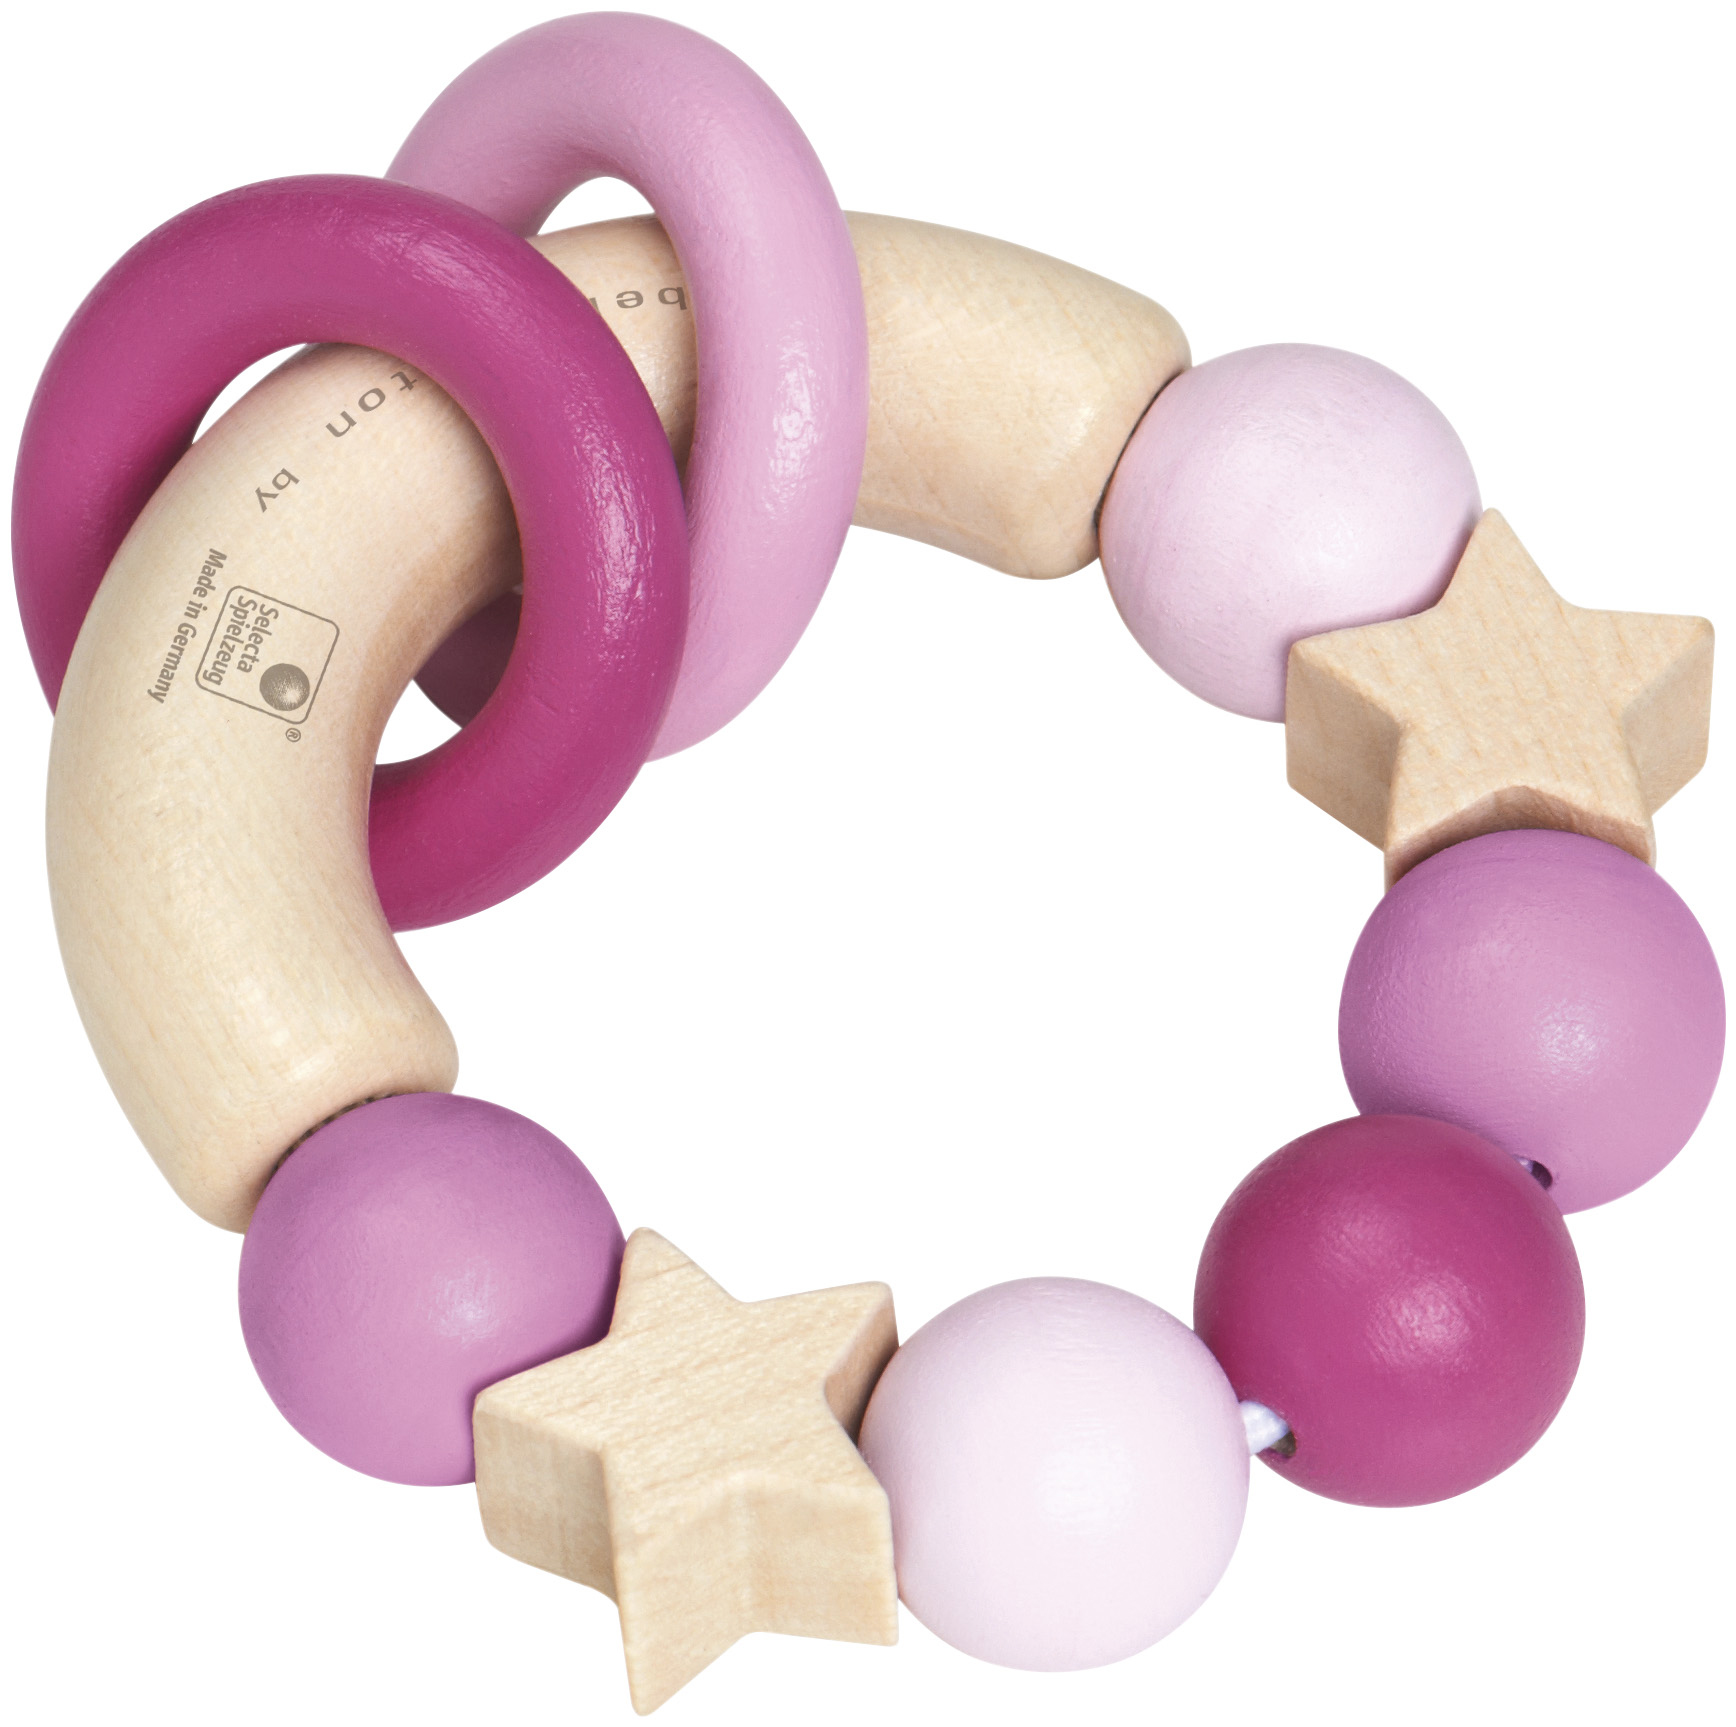 SELECTA bellybutton by rosa, Holzspielzeug Selecta® Glücksgriff 7,5 cm nein 